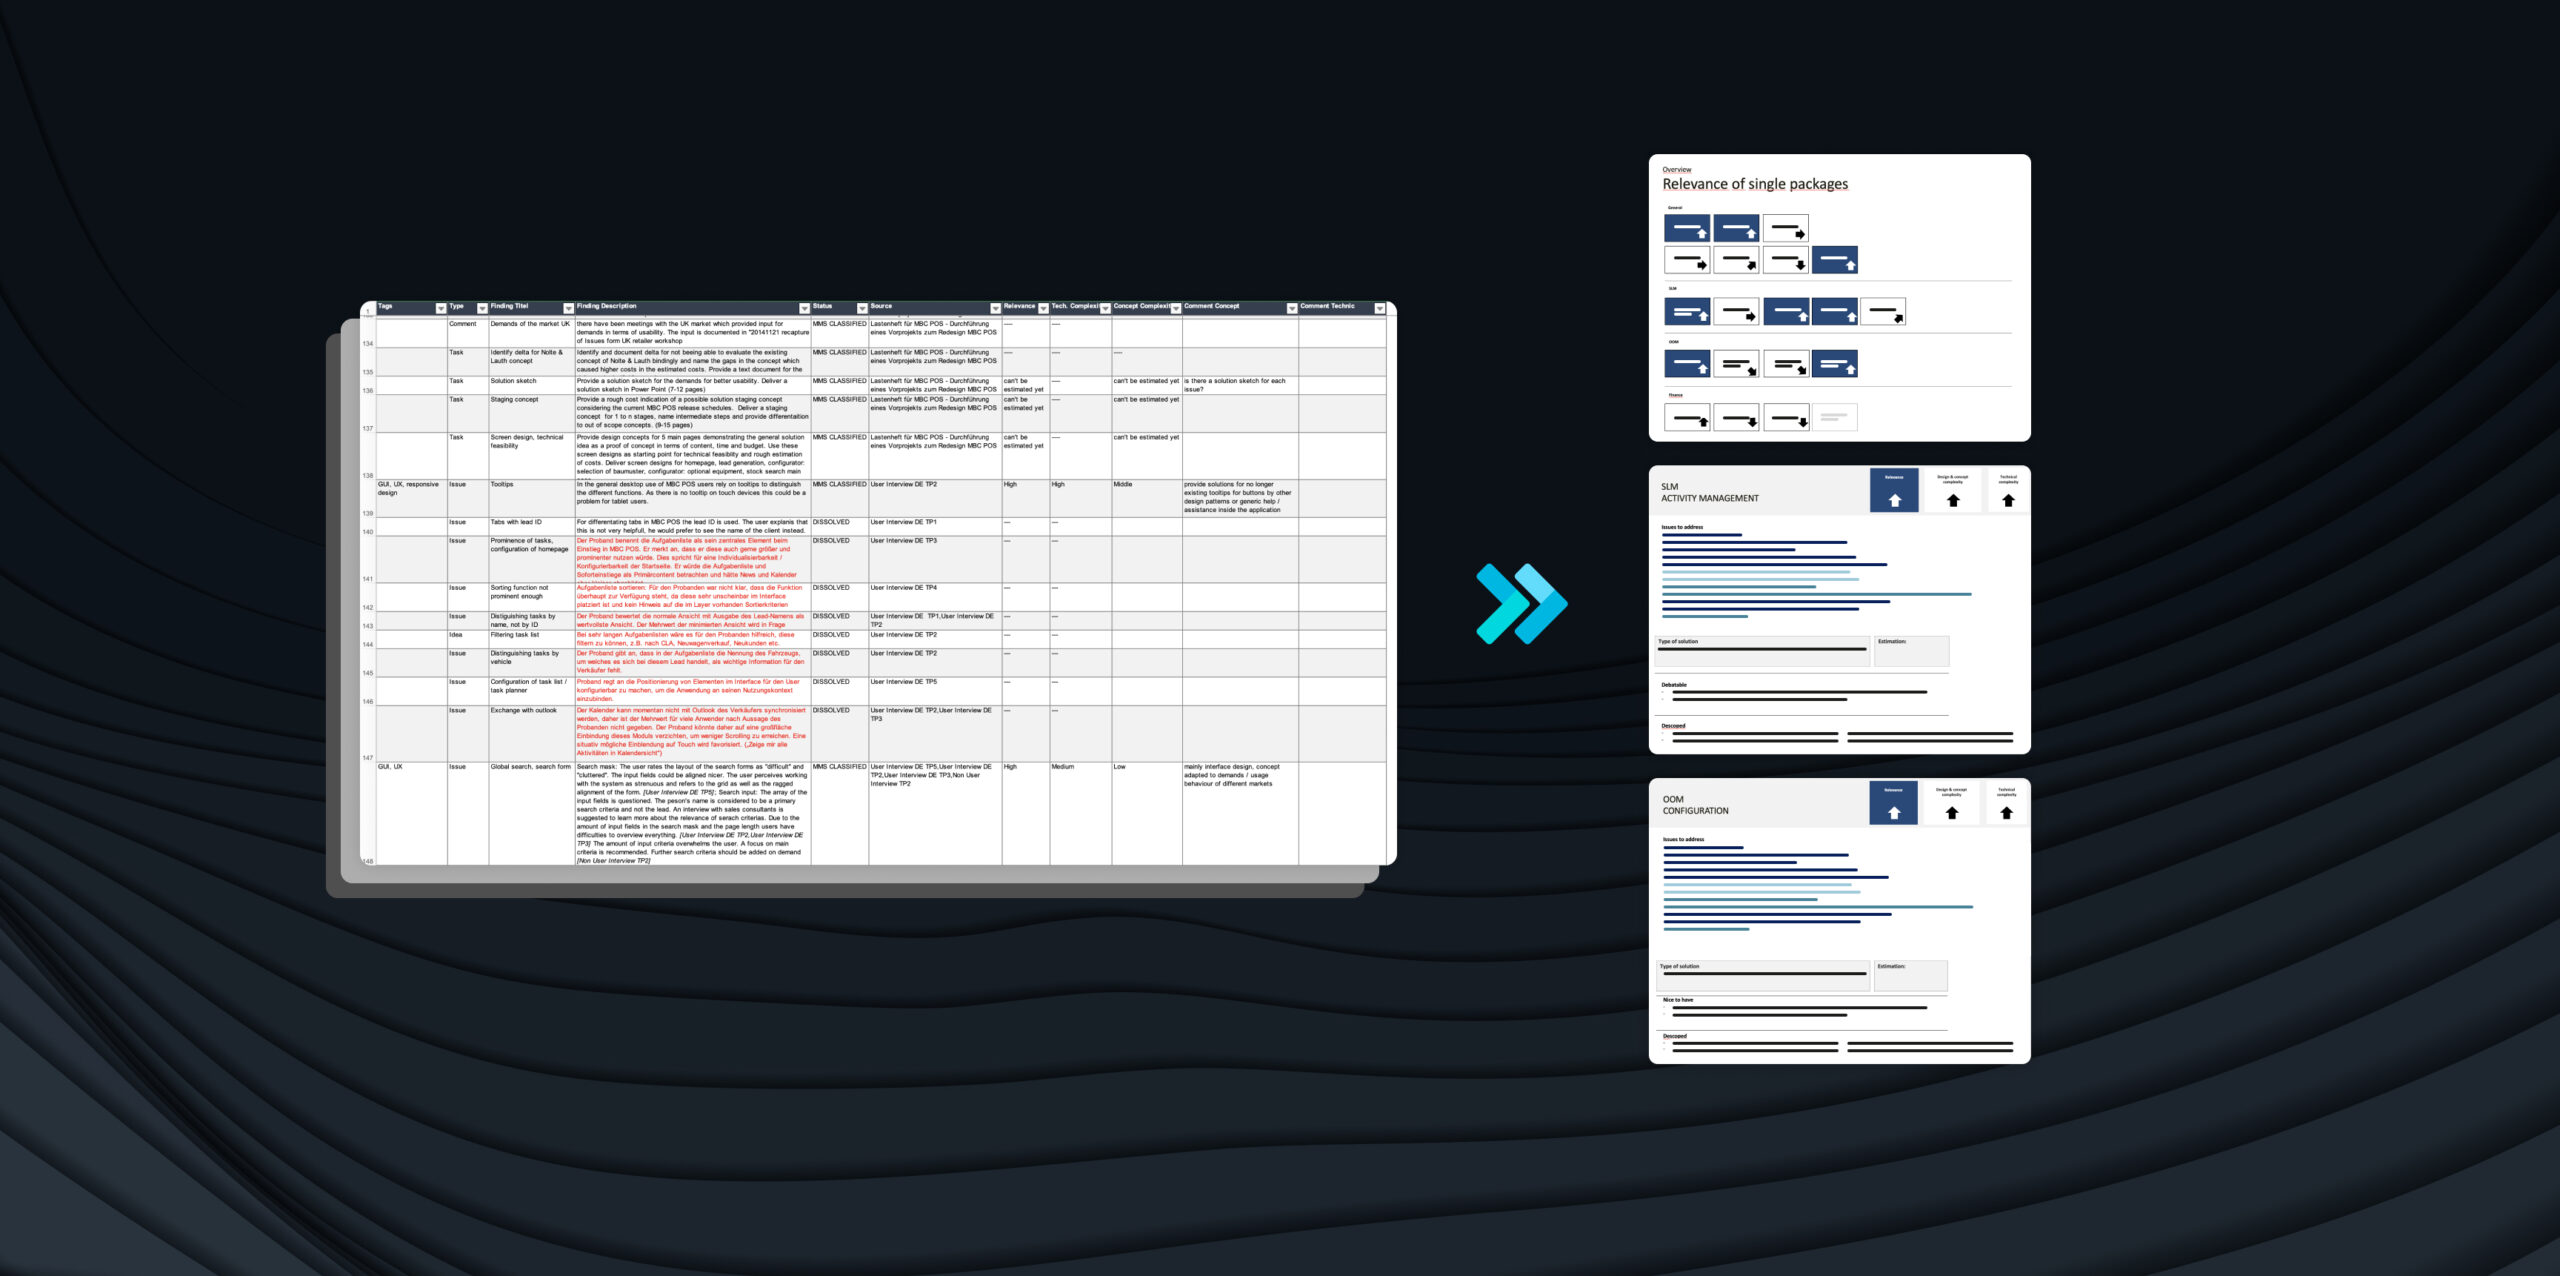 Screenshots of spreadsheet and presentations